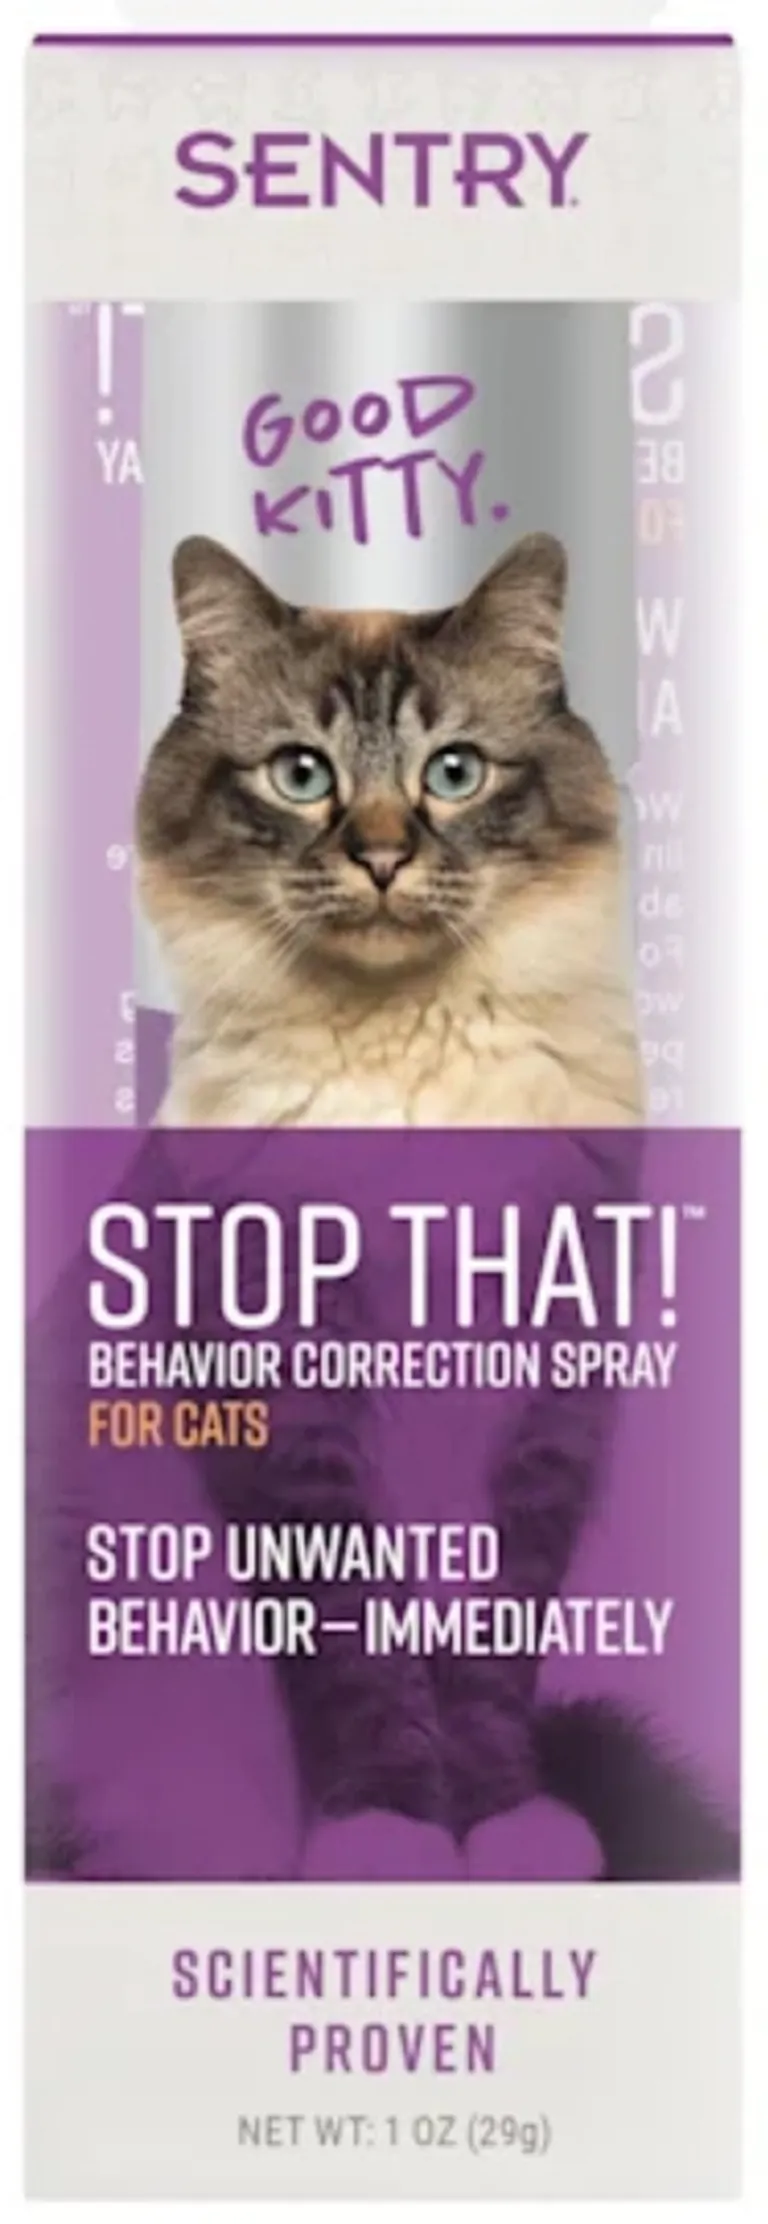 Sentry Stop That! Behavior Correction Spray for Cats Photo 2